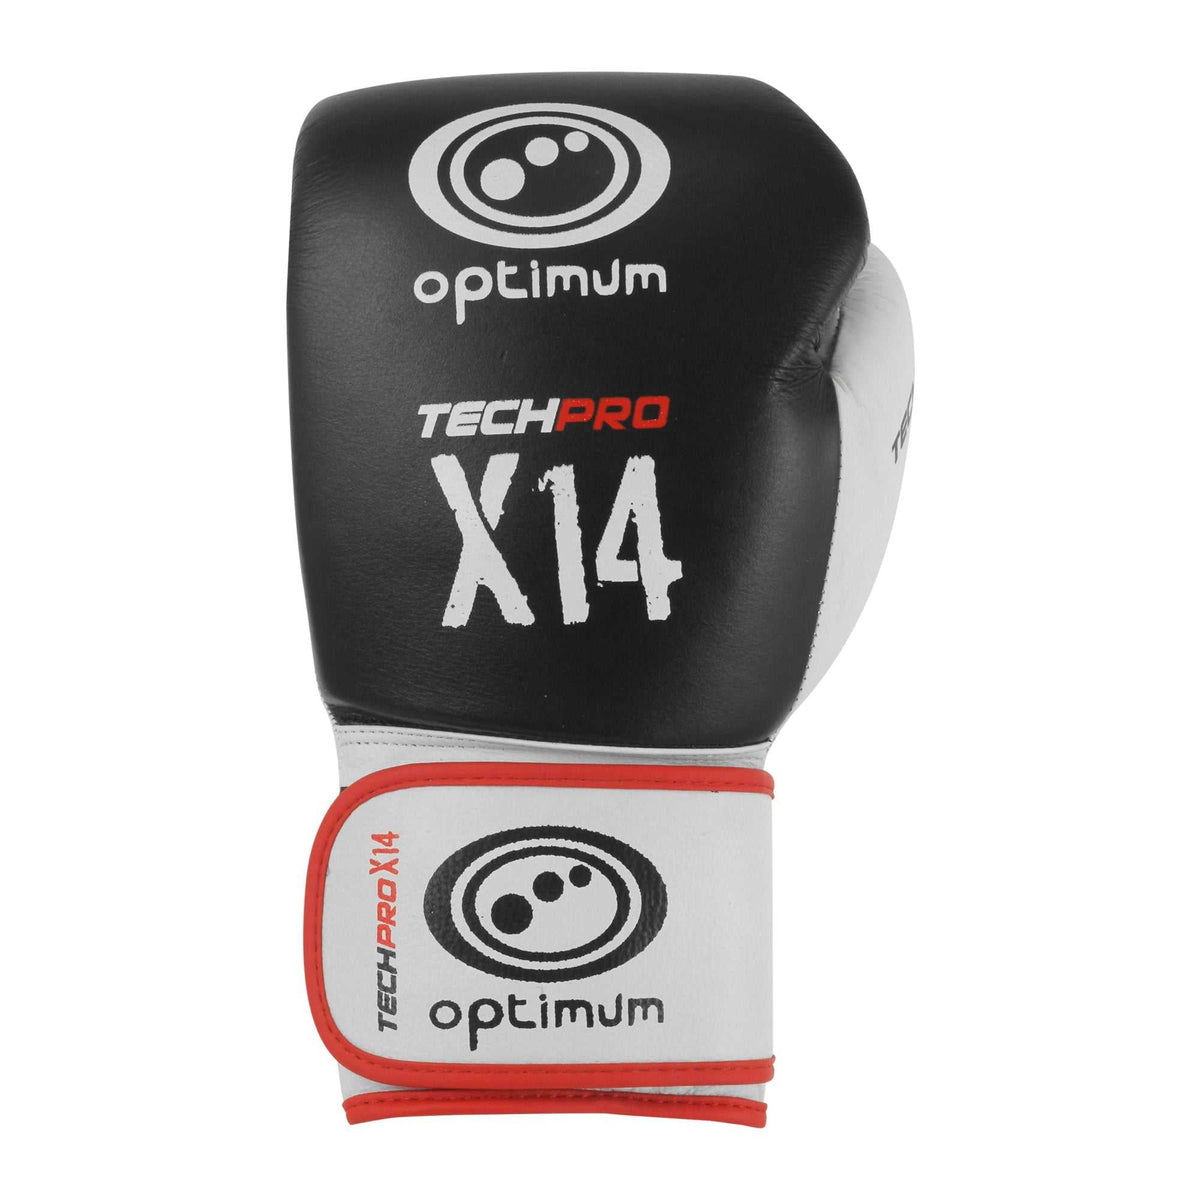 Techpro X14 Boxing Gloves - Optimum